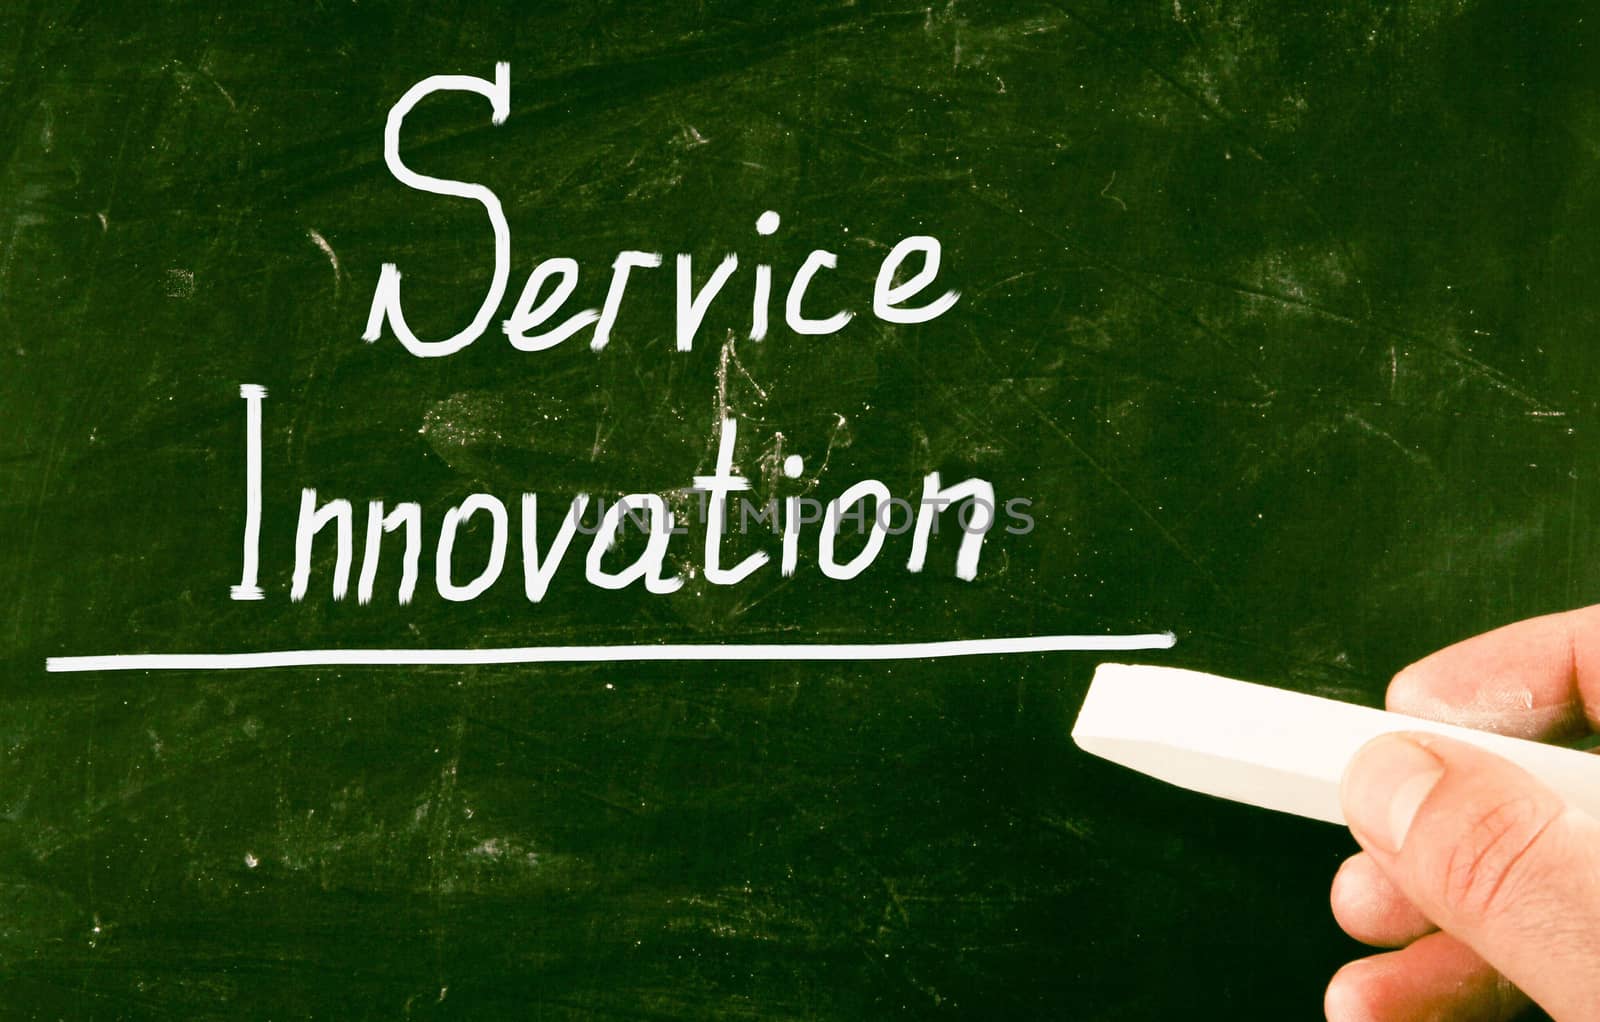 service innovation by nenov